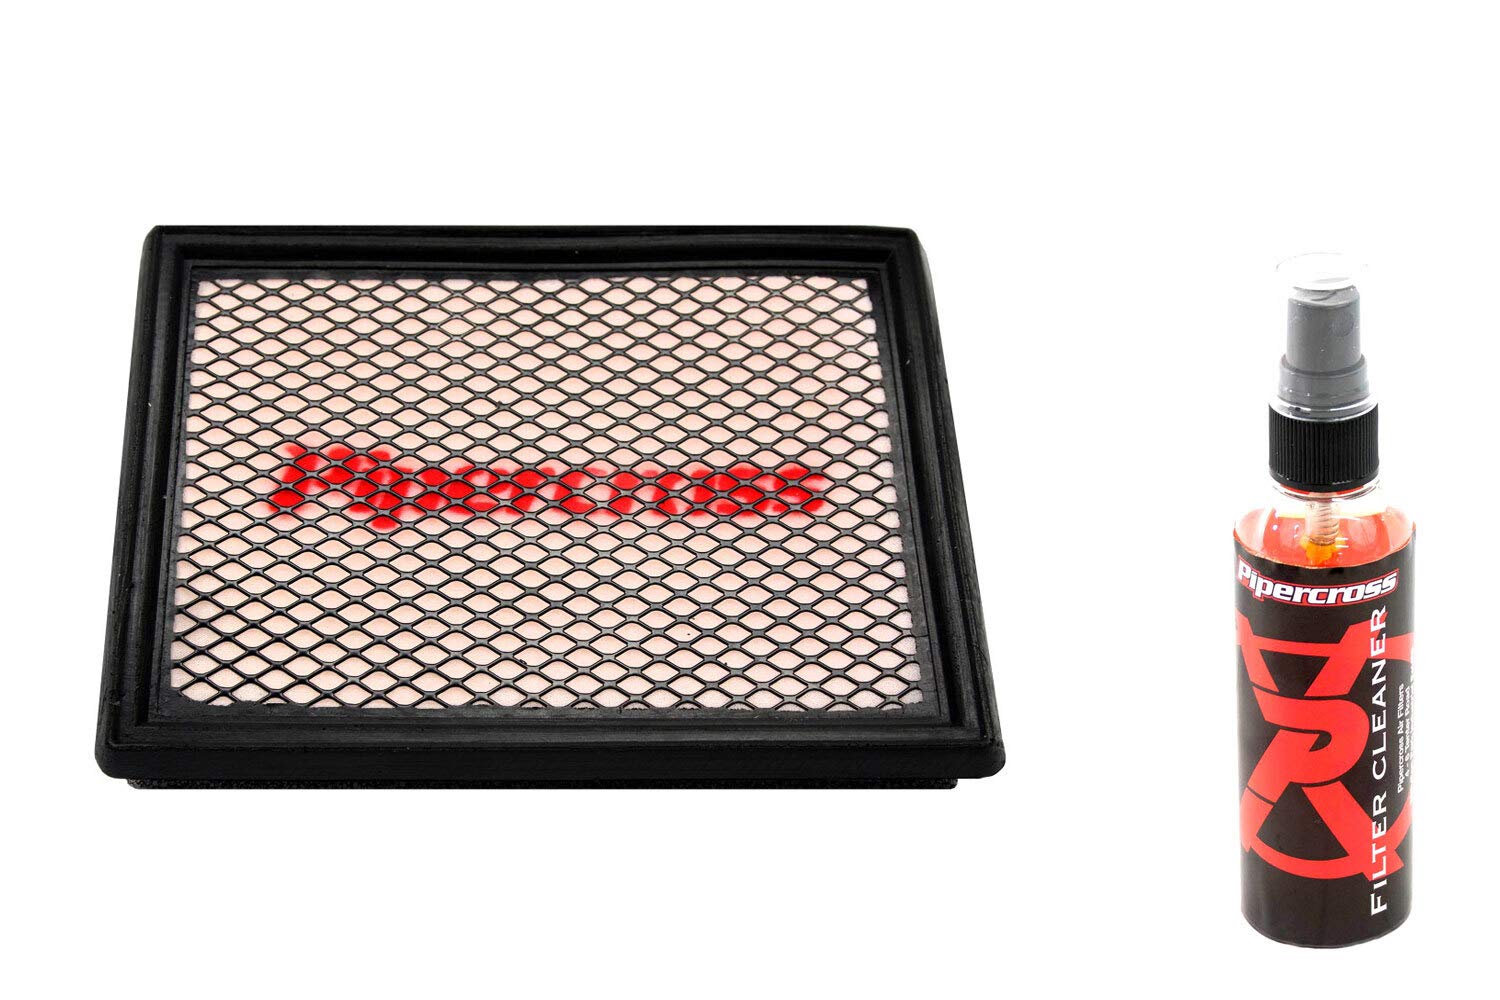 Pipercross Luftfilter+Reiniger kompatibel mit Nissan Almera N15 1.6 90/99 PS 09/95-05/00 von Pipercross